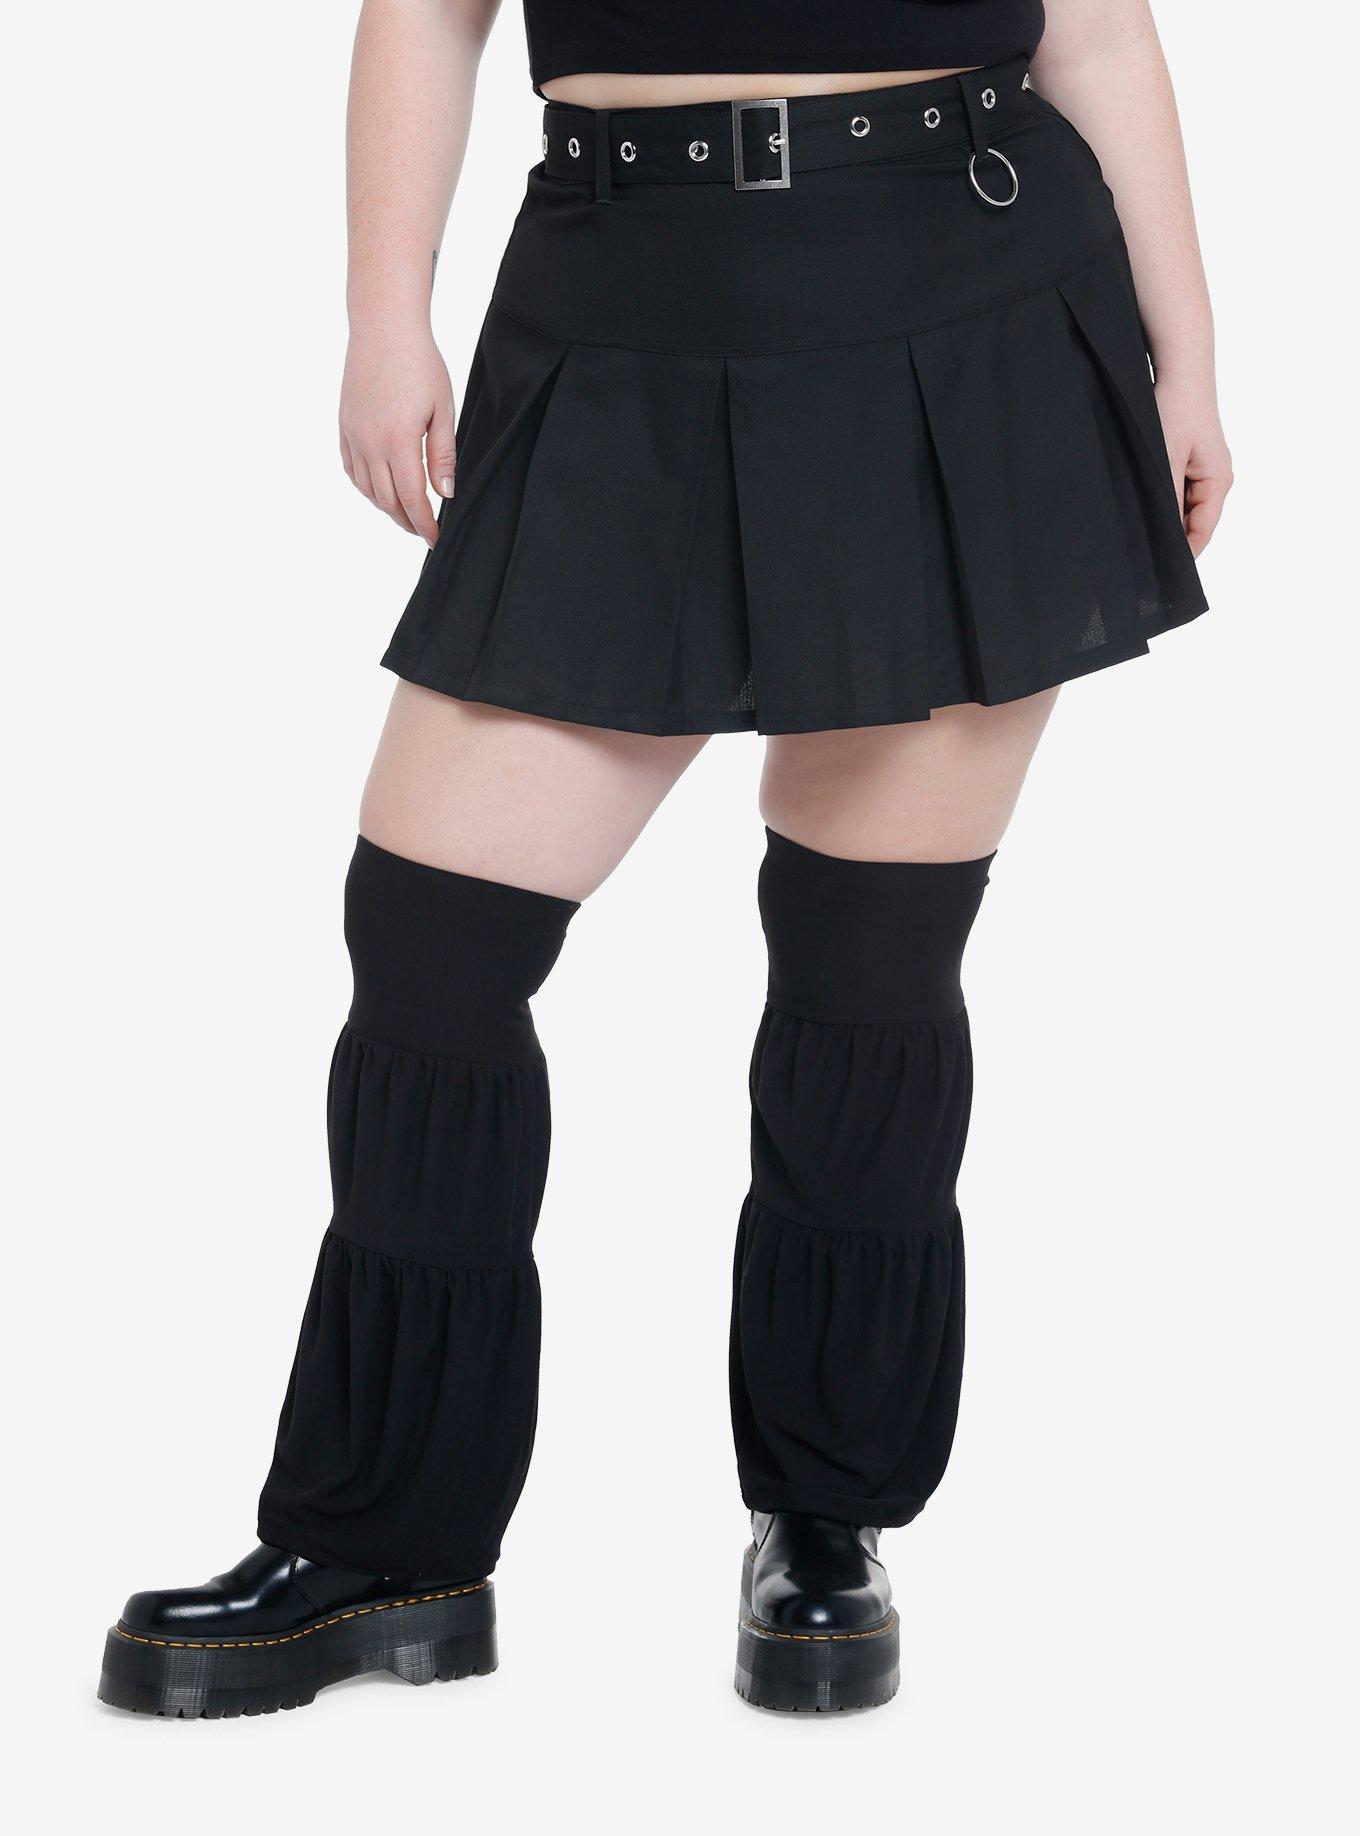 Black Pleated Mini Skirt Warmers Plus Hot Topic